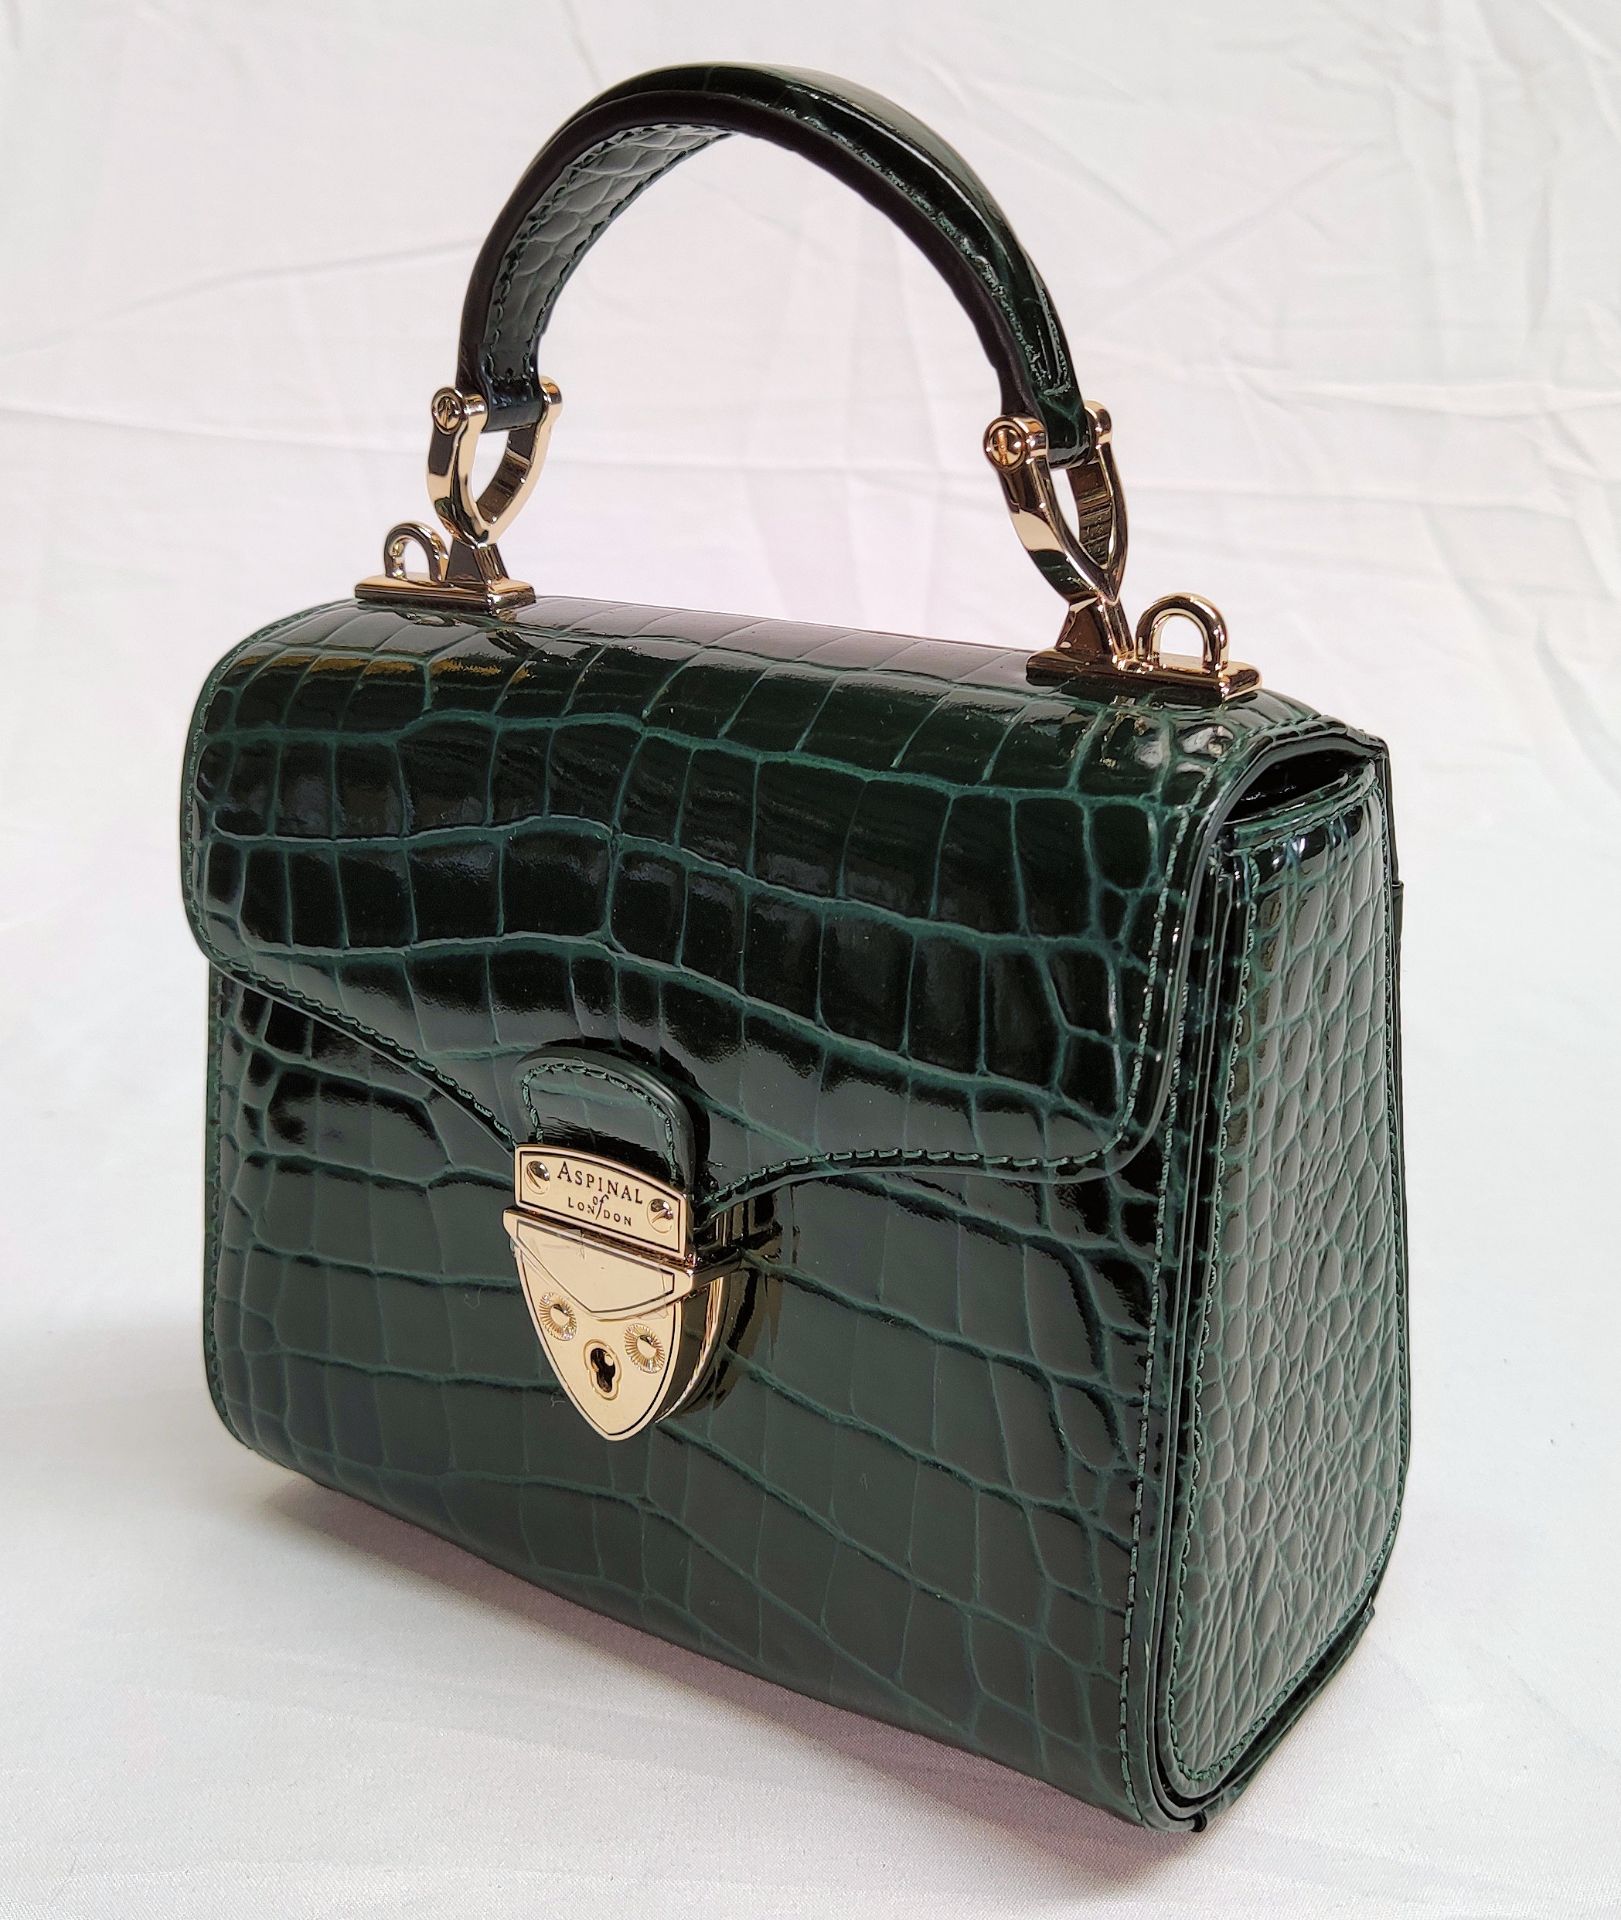 1 x ASPINAL OF LONDON Mayfair Mini Bag - Evergreen Patent Croc - Boxed - Original RRP £495 - Ref: - Image 7 of 21